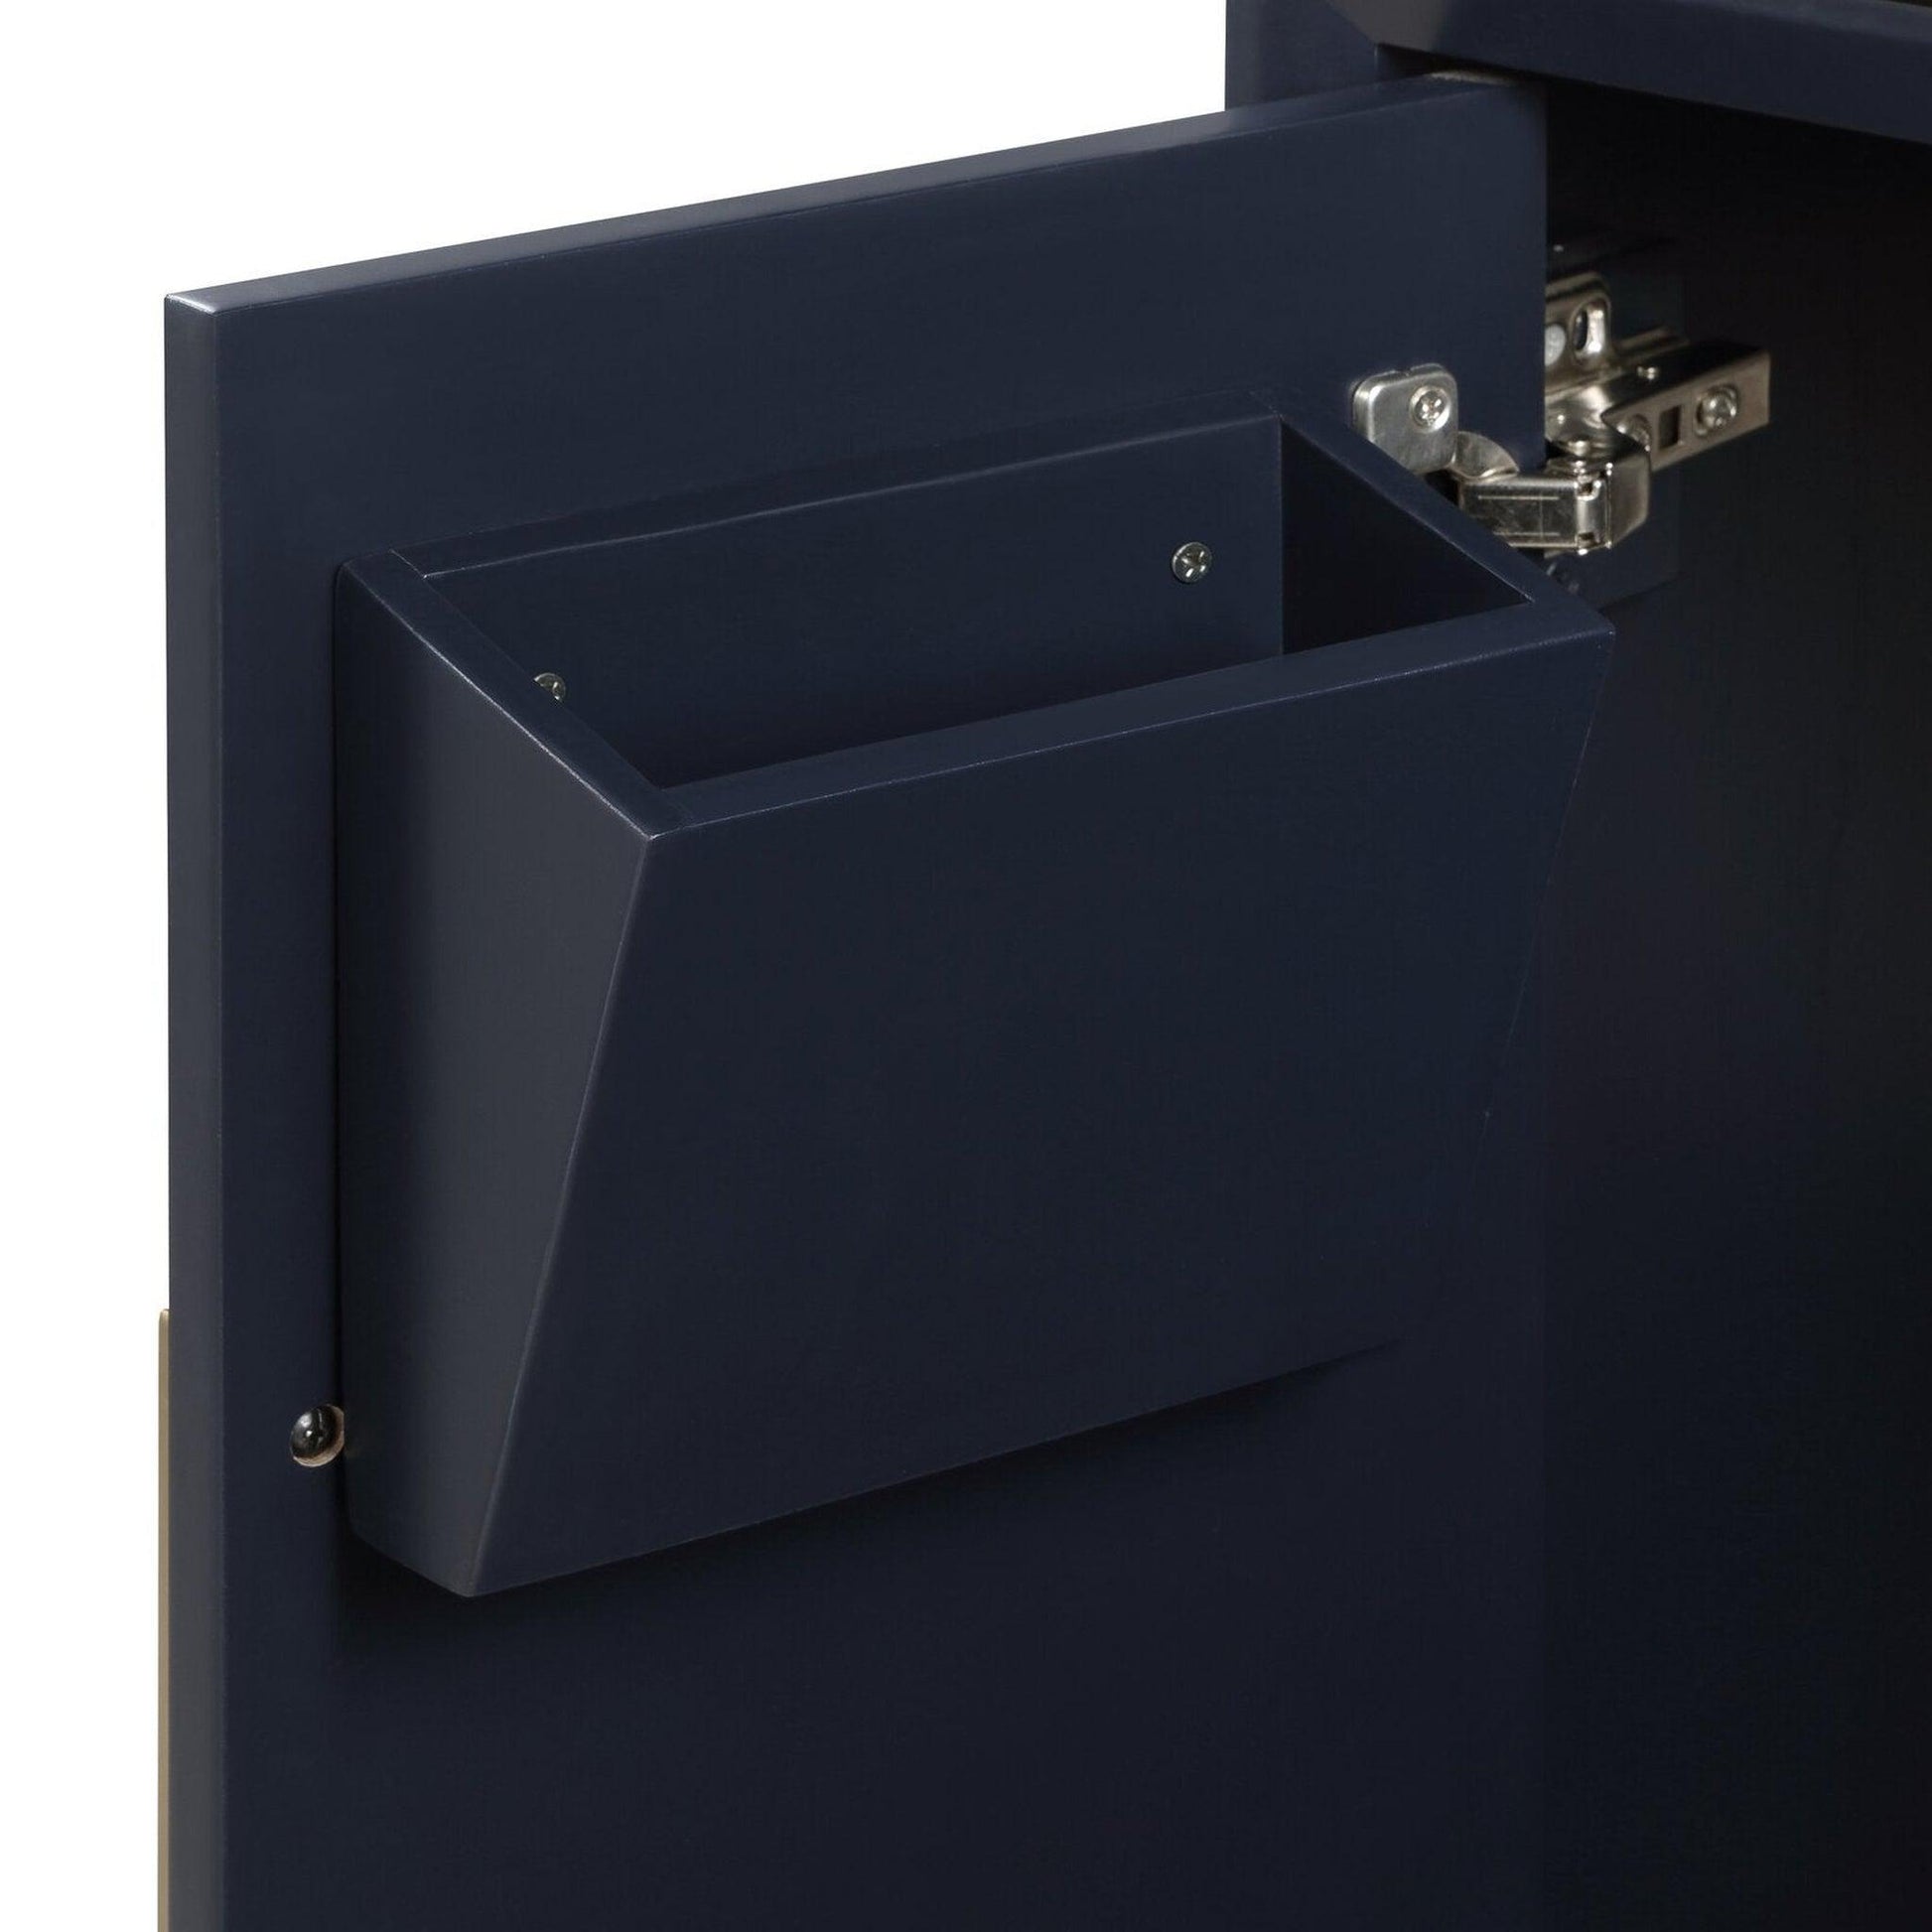 Bemma Design Gracie 48" Pacific Blue Solid Wood Freestanding Bathroom Vanity With Single 3-Hole Italian Carra Marble Vanity Top, Rectangle Undermount Sink, Backsplash and Satin Brass Trim